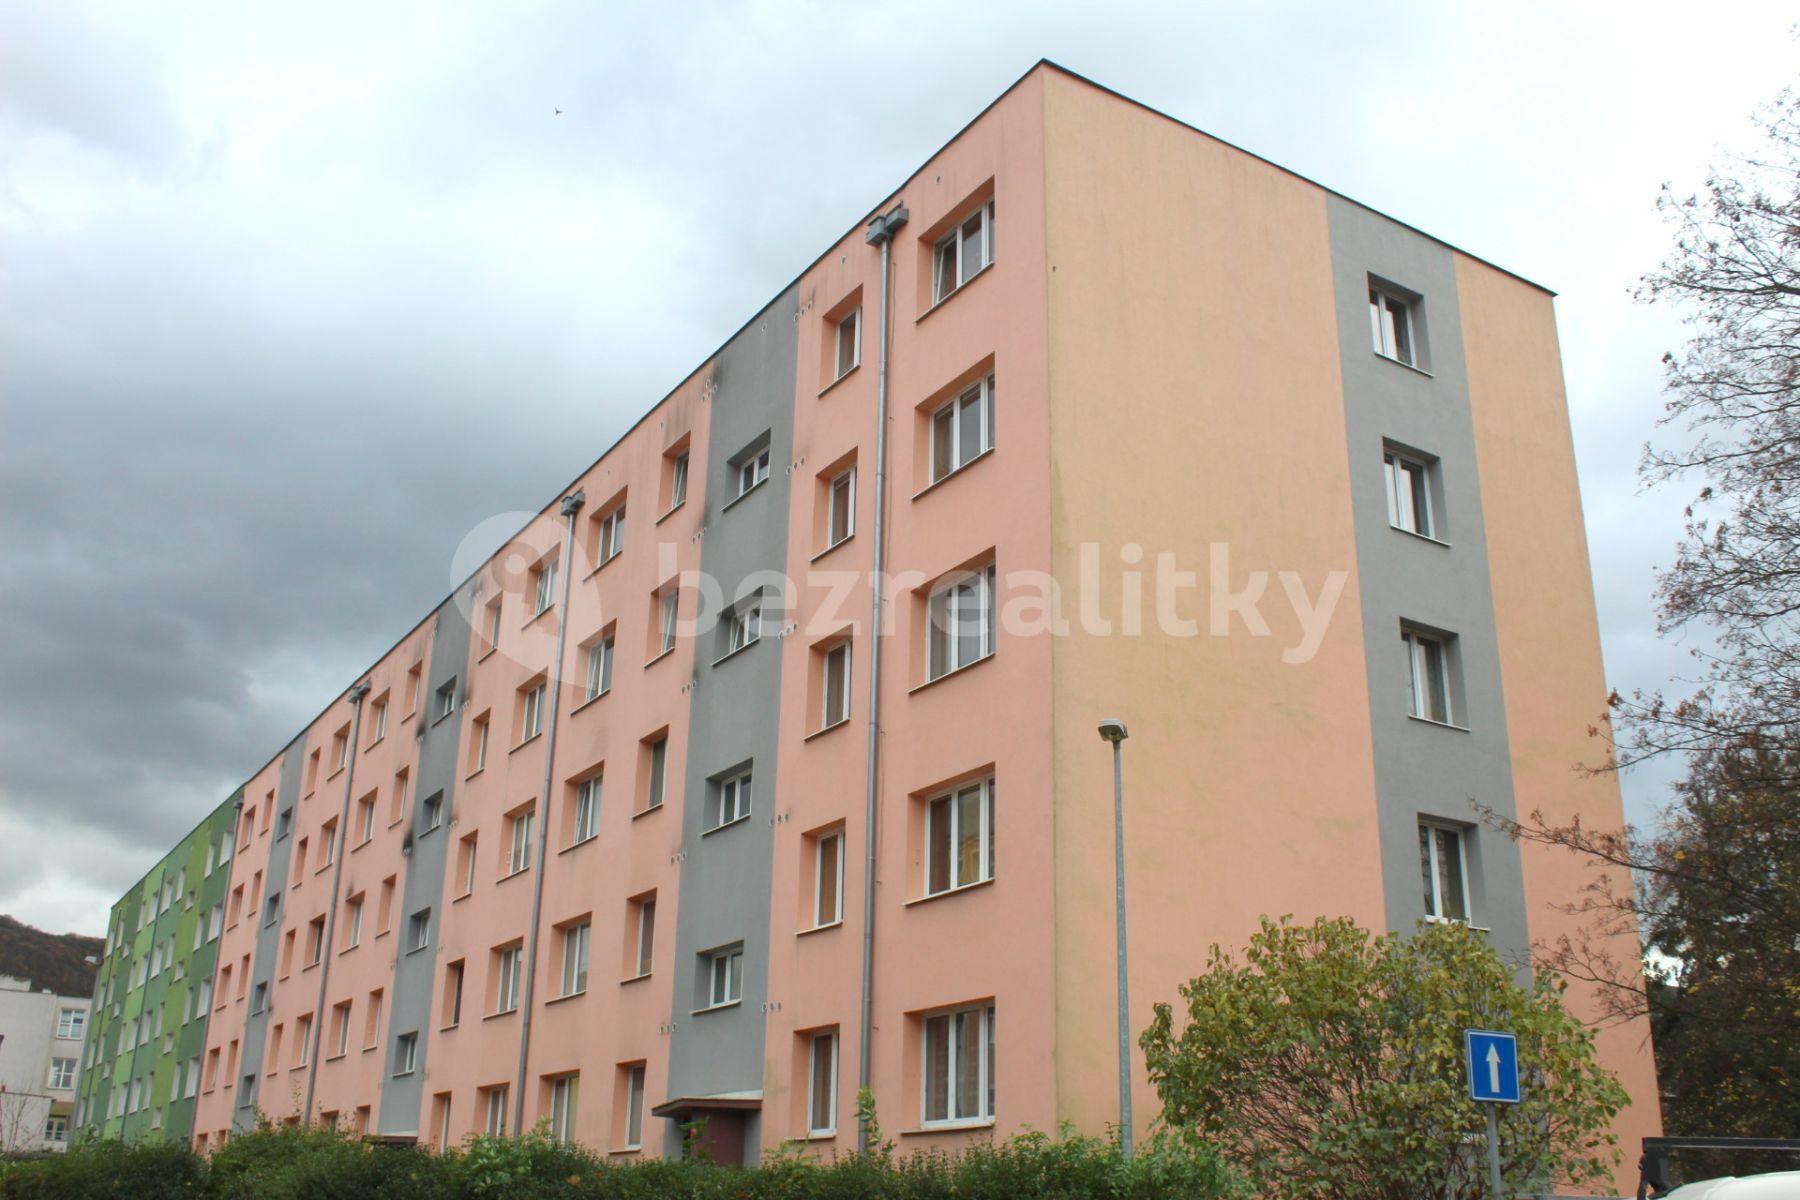 2 bedroom flat to rent, 53 m², Kozinova, Ústí nad Labem, Ústecký Region